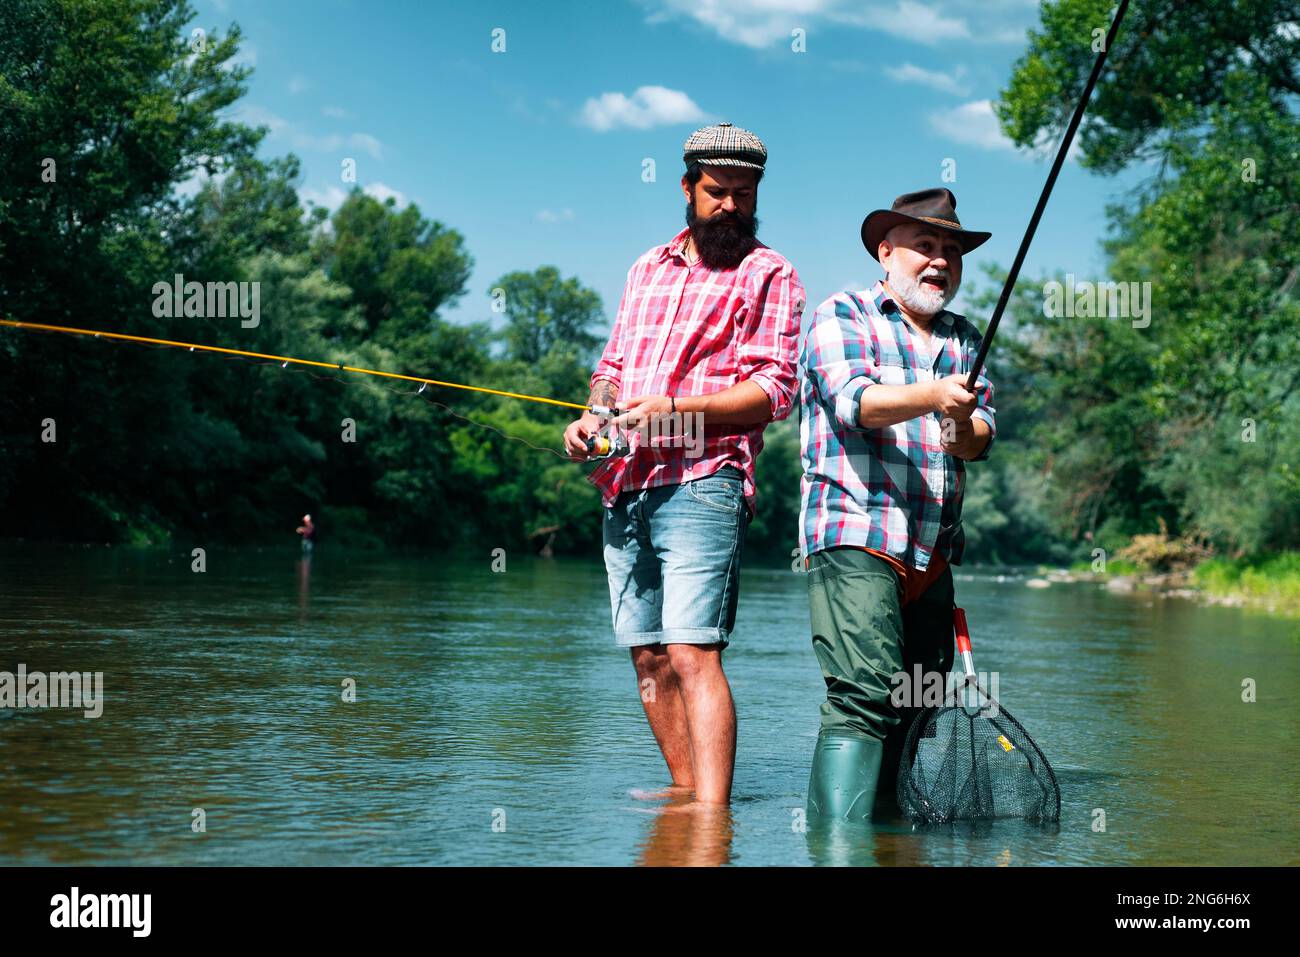 https://c8.alamy.com/comp/2NG6H6X/bearded-elegant-men-fisher-fishing-equipment-fishing-is-fun-man-relaxing-and-fishing-by-lakeside-pothunter-fly-fish-hobby-of-men-in-checkered-2NG6H6X.jpg